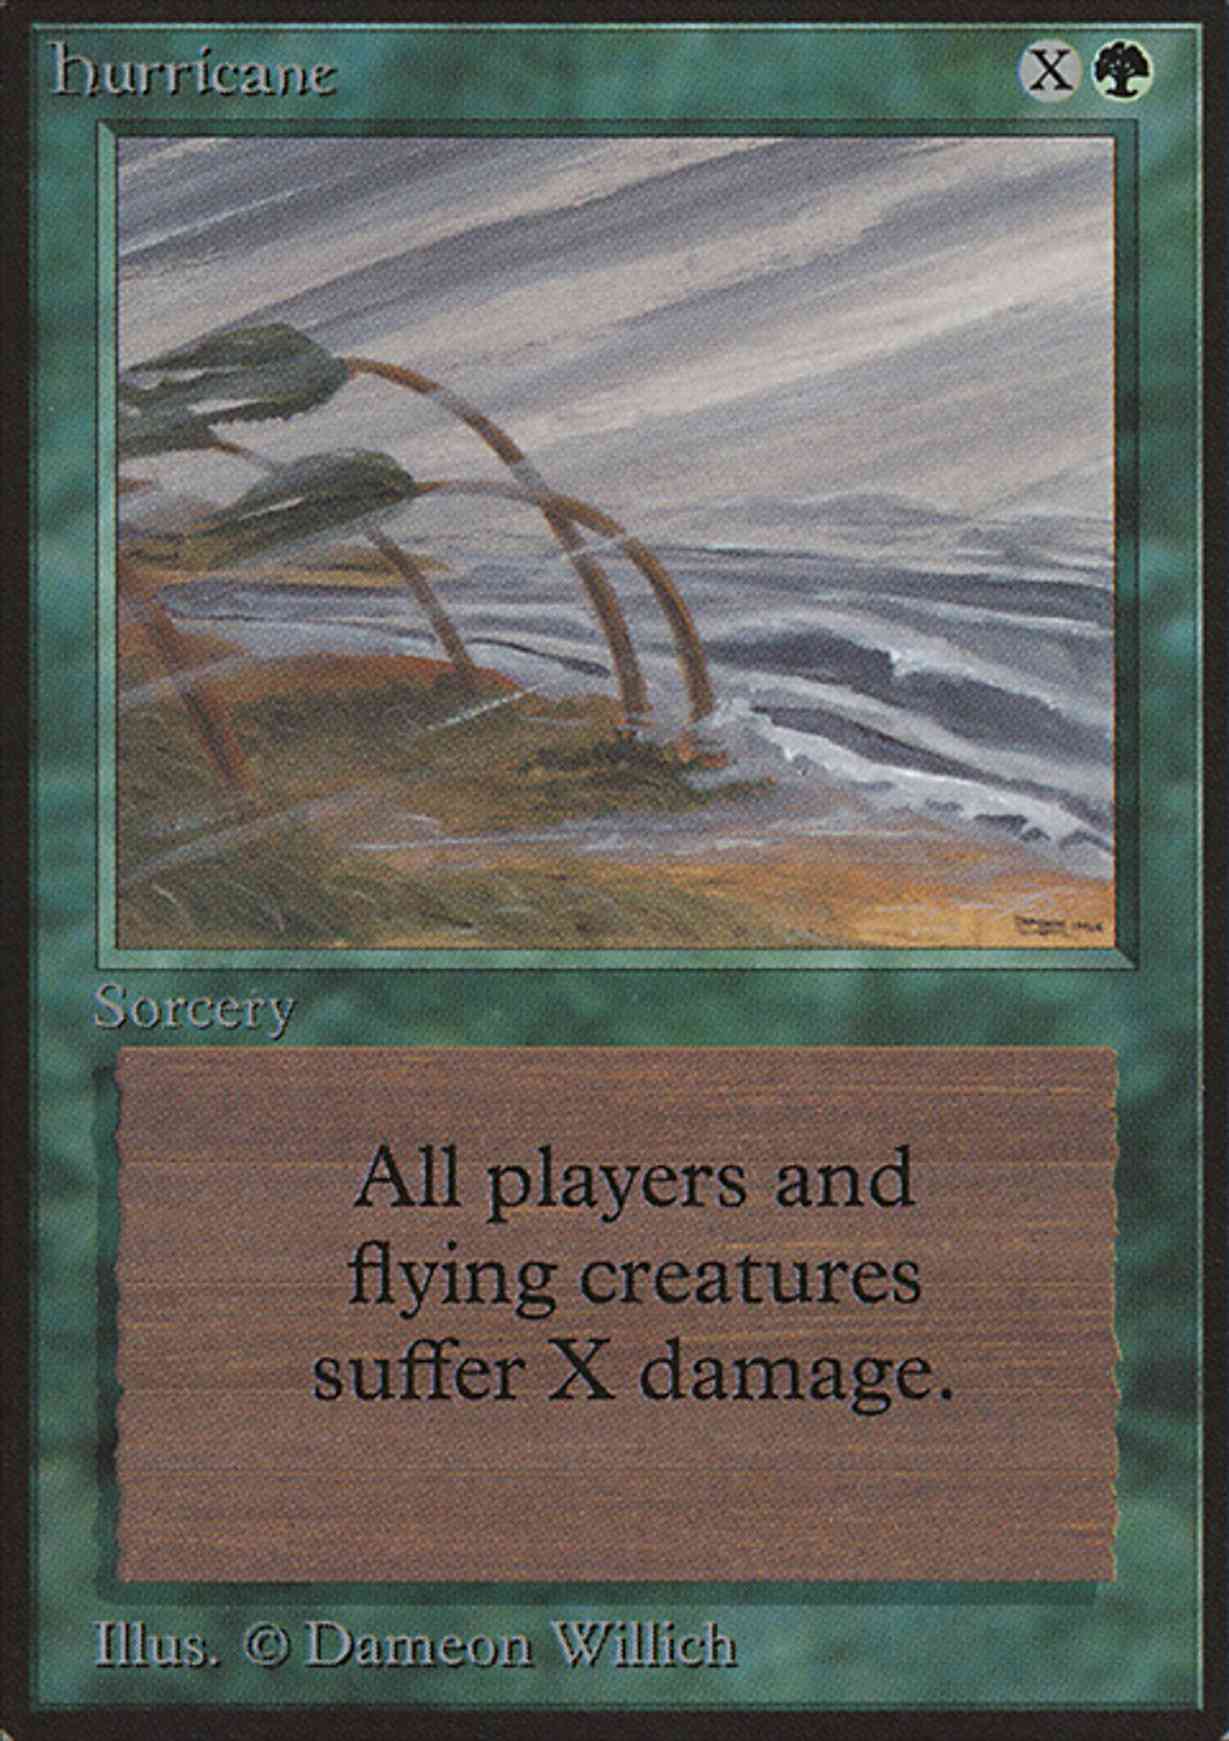 Hurricane magic card front